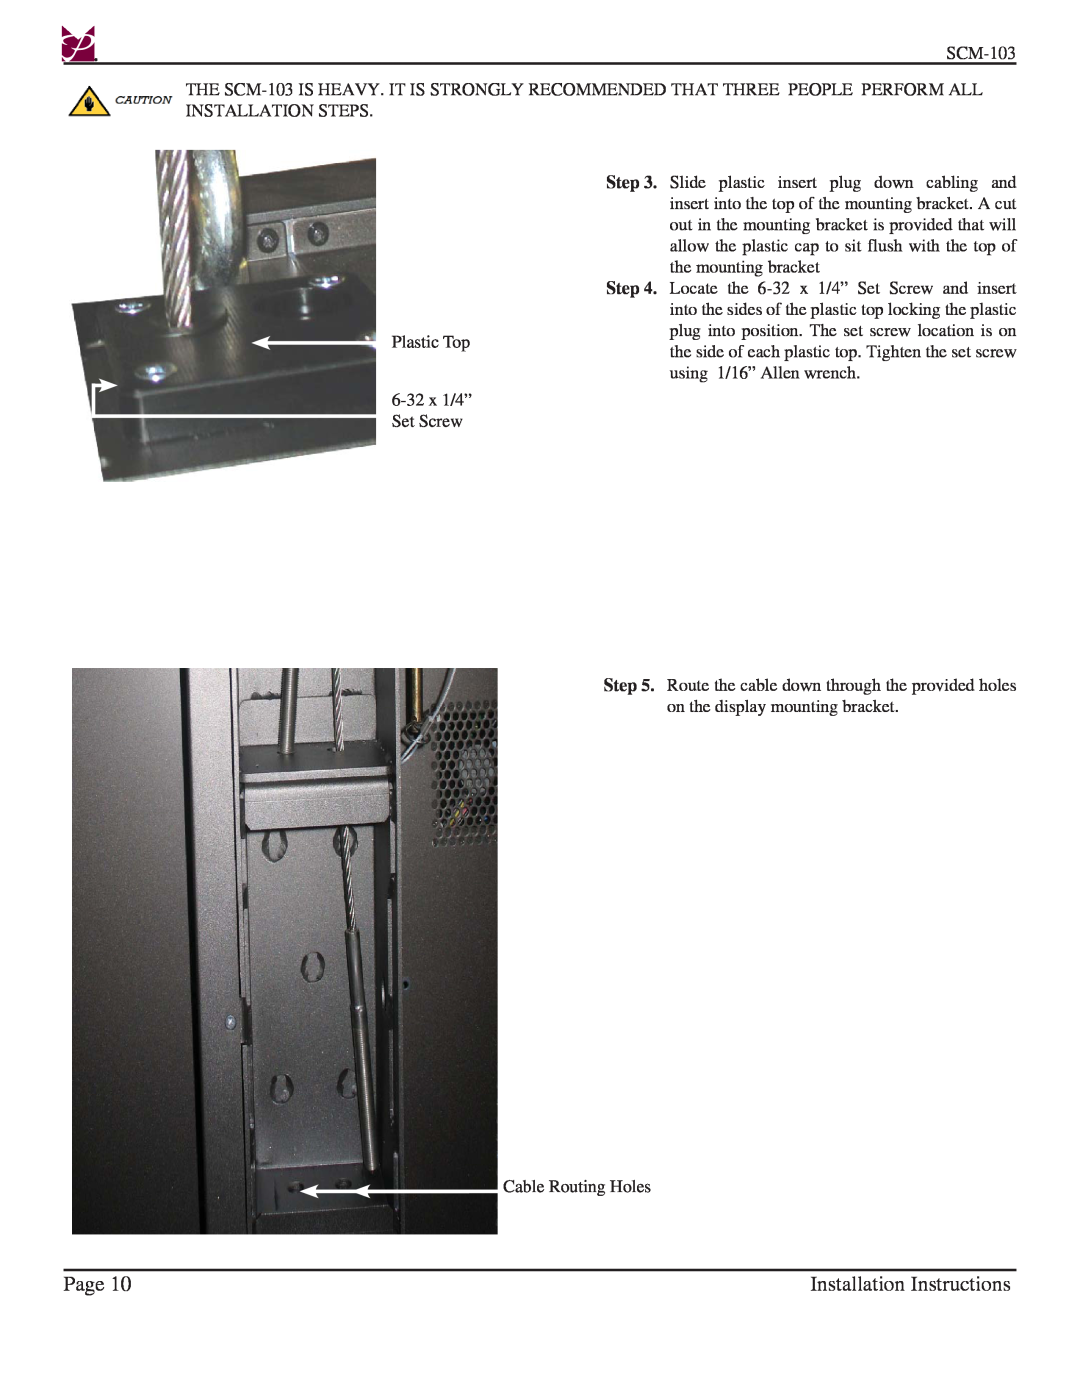 Premier Mounts SCM-103 installation instructions 